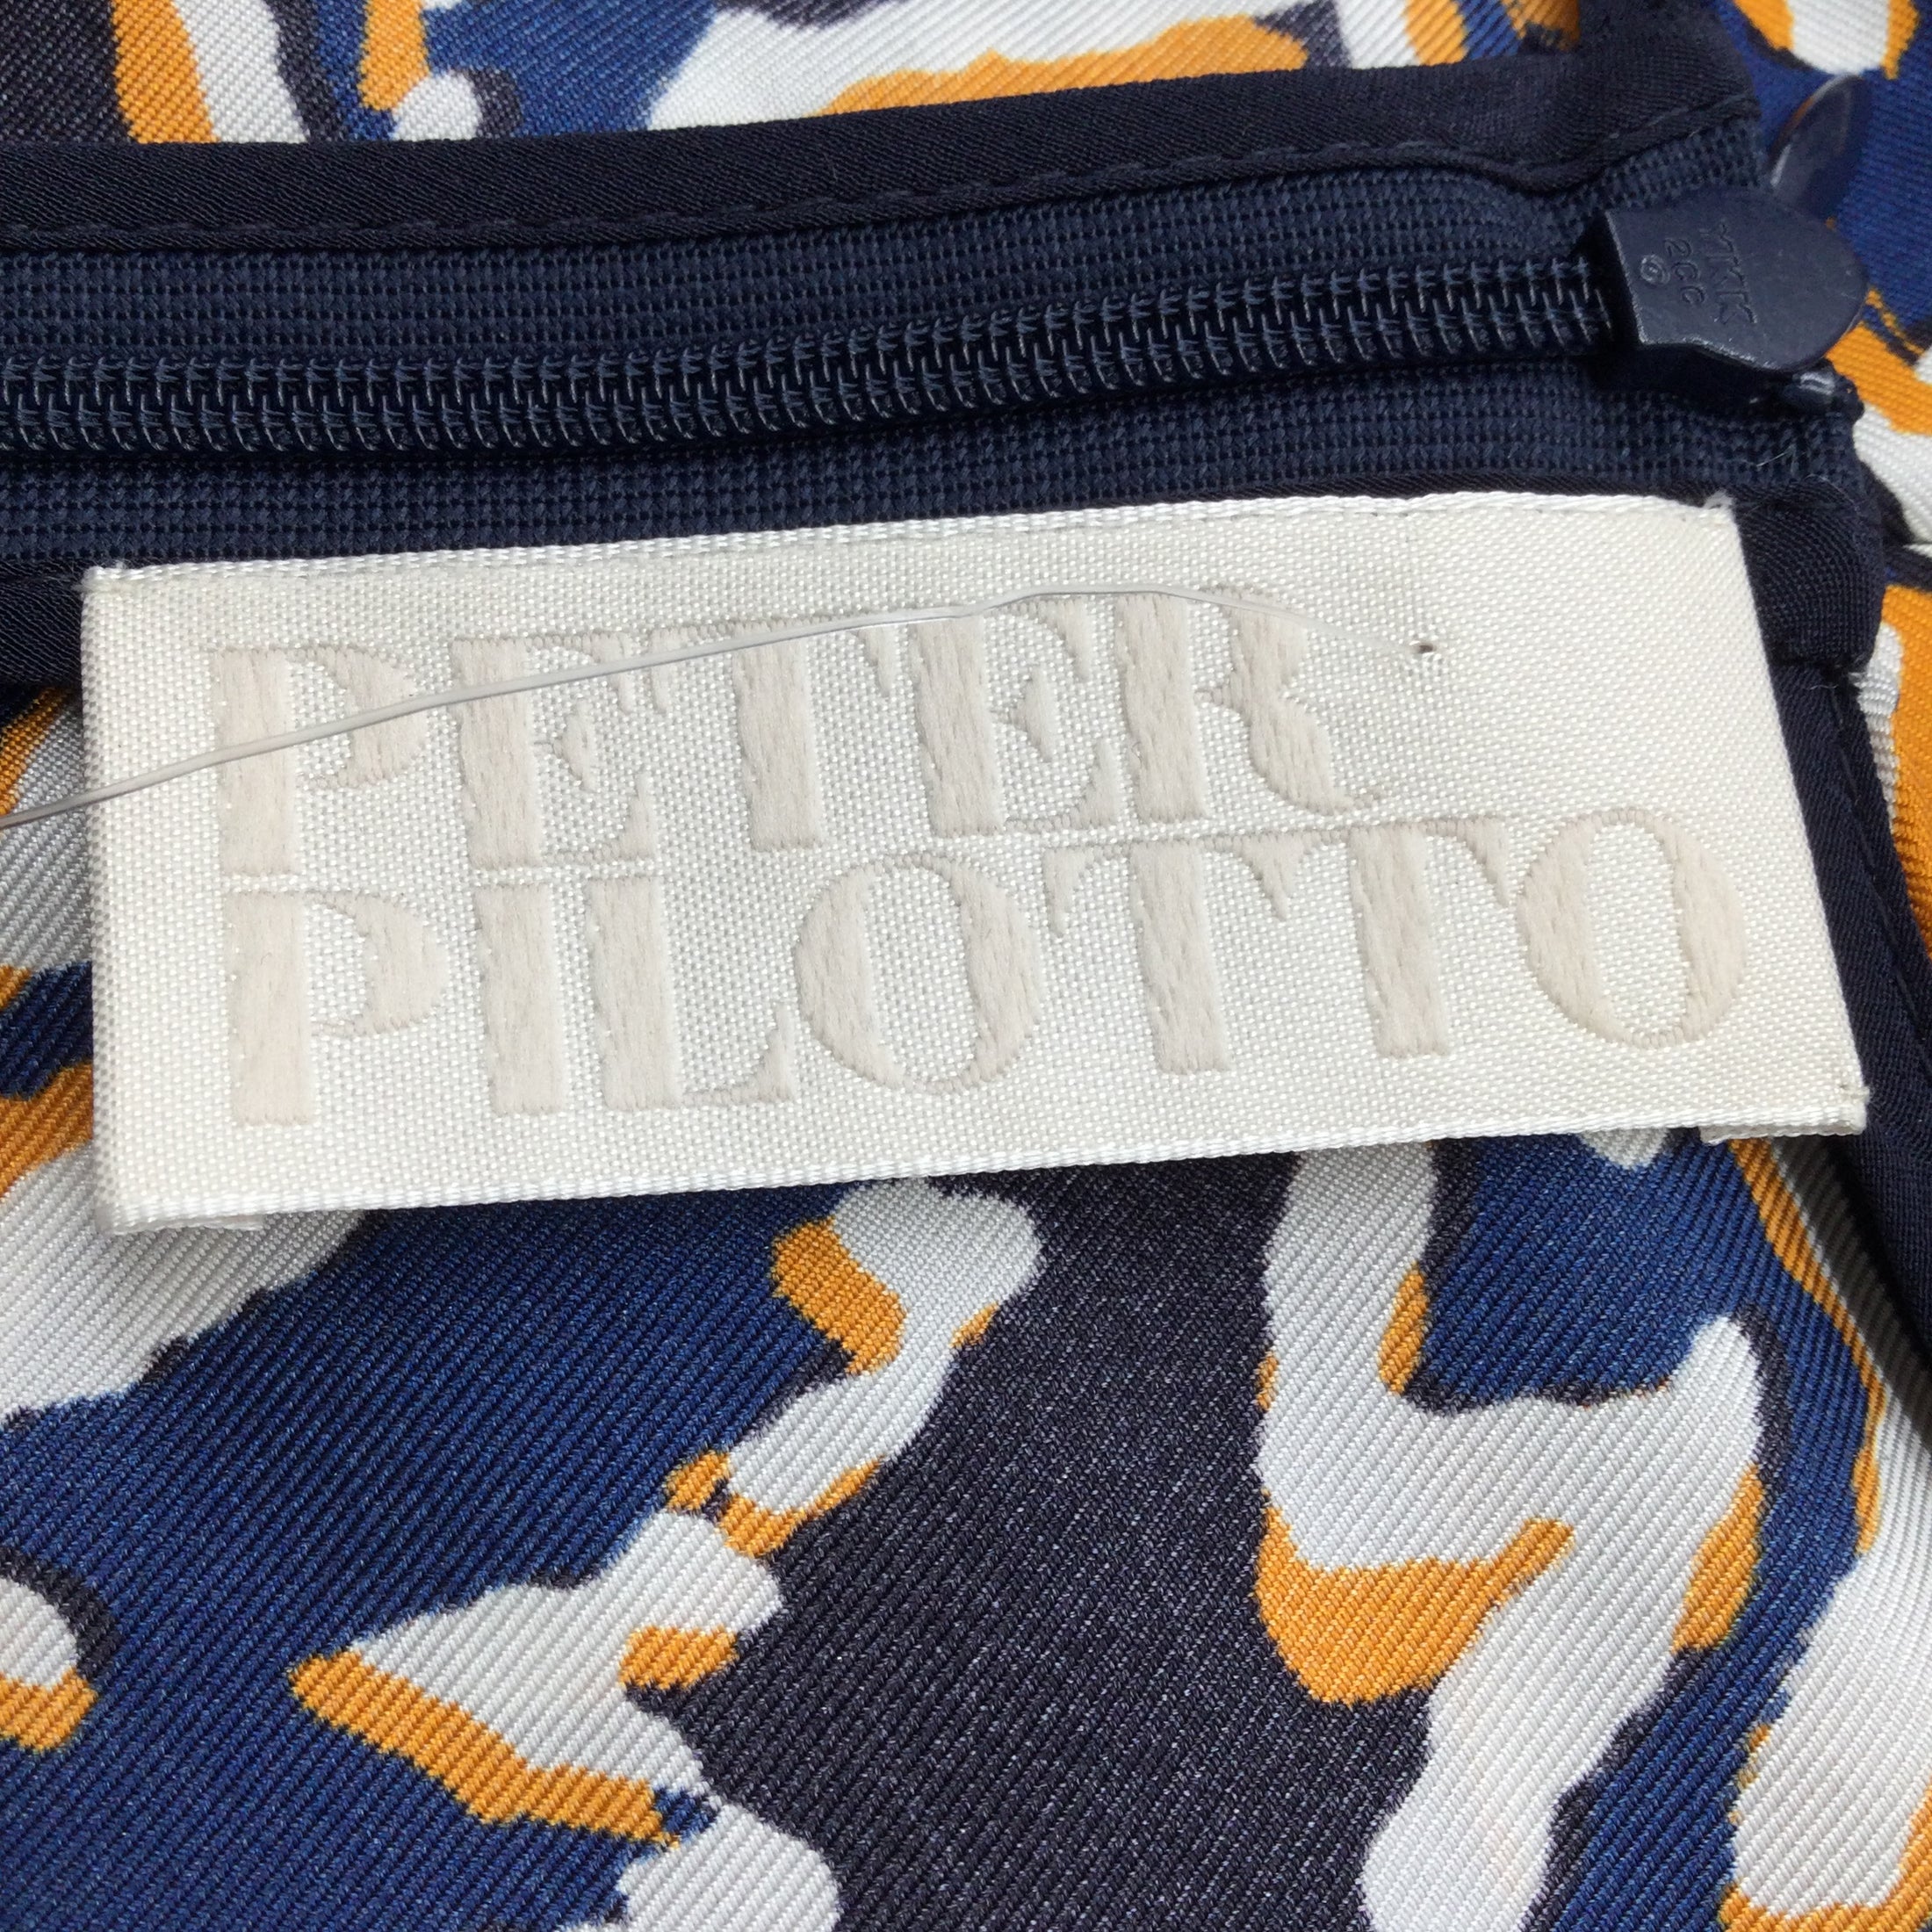 Peter Pilotto Navy Blue / Orange Printed Silk Blouse